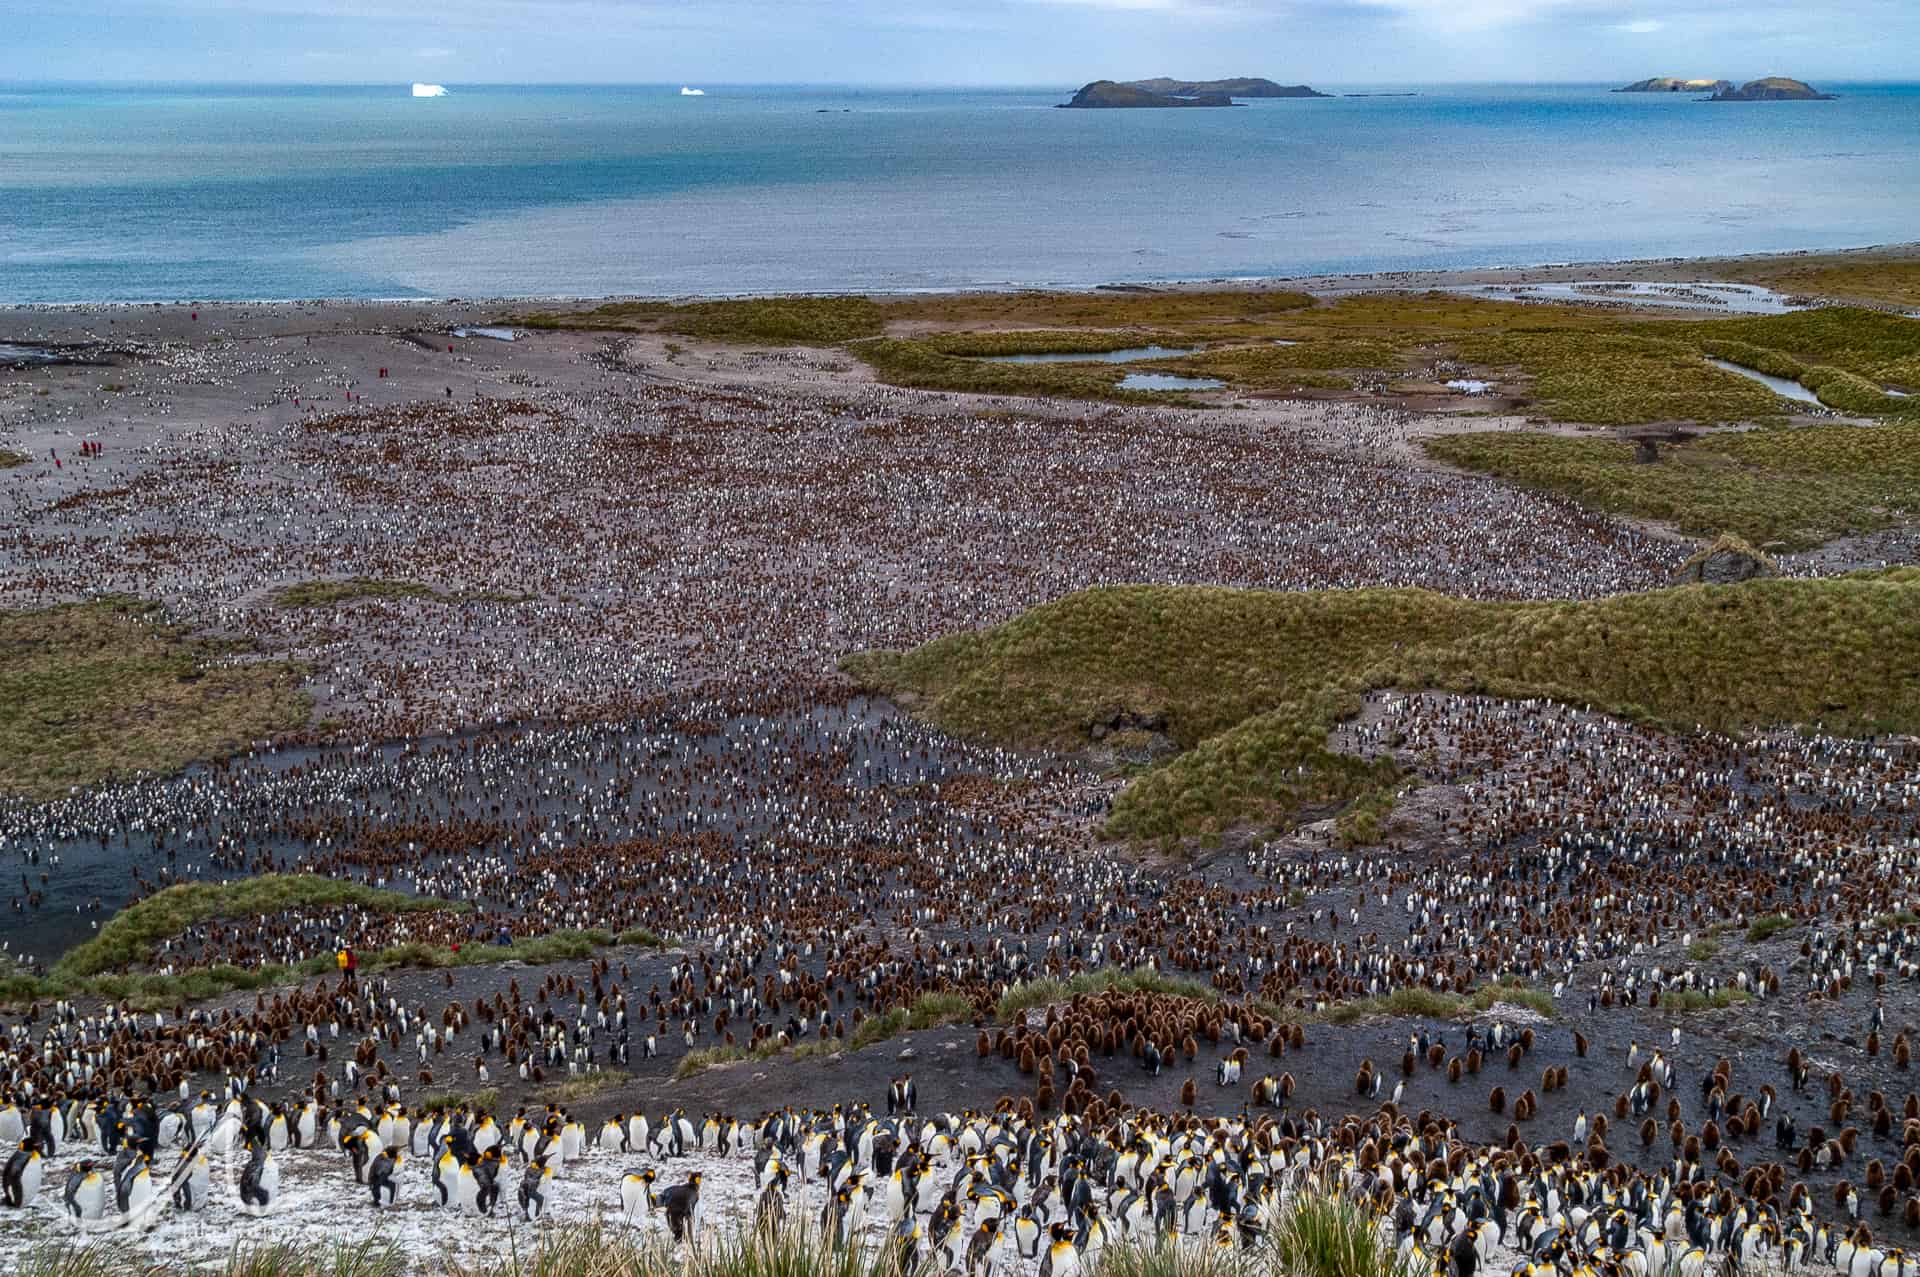 King penguin (Aptenodytes patagonicus) colony at Salisbury Plain, South Georgia.